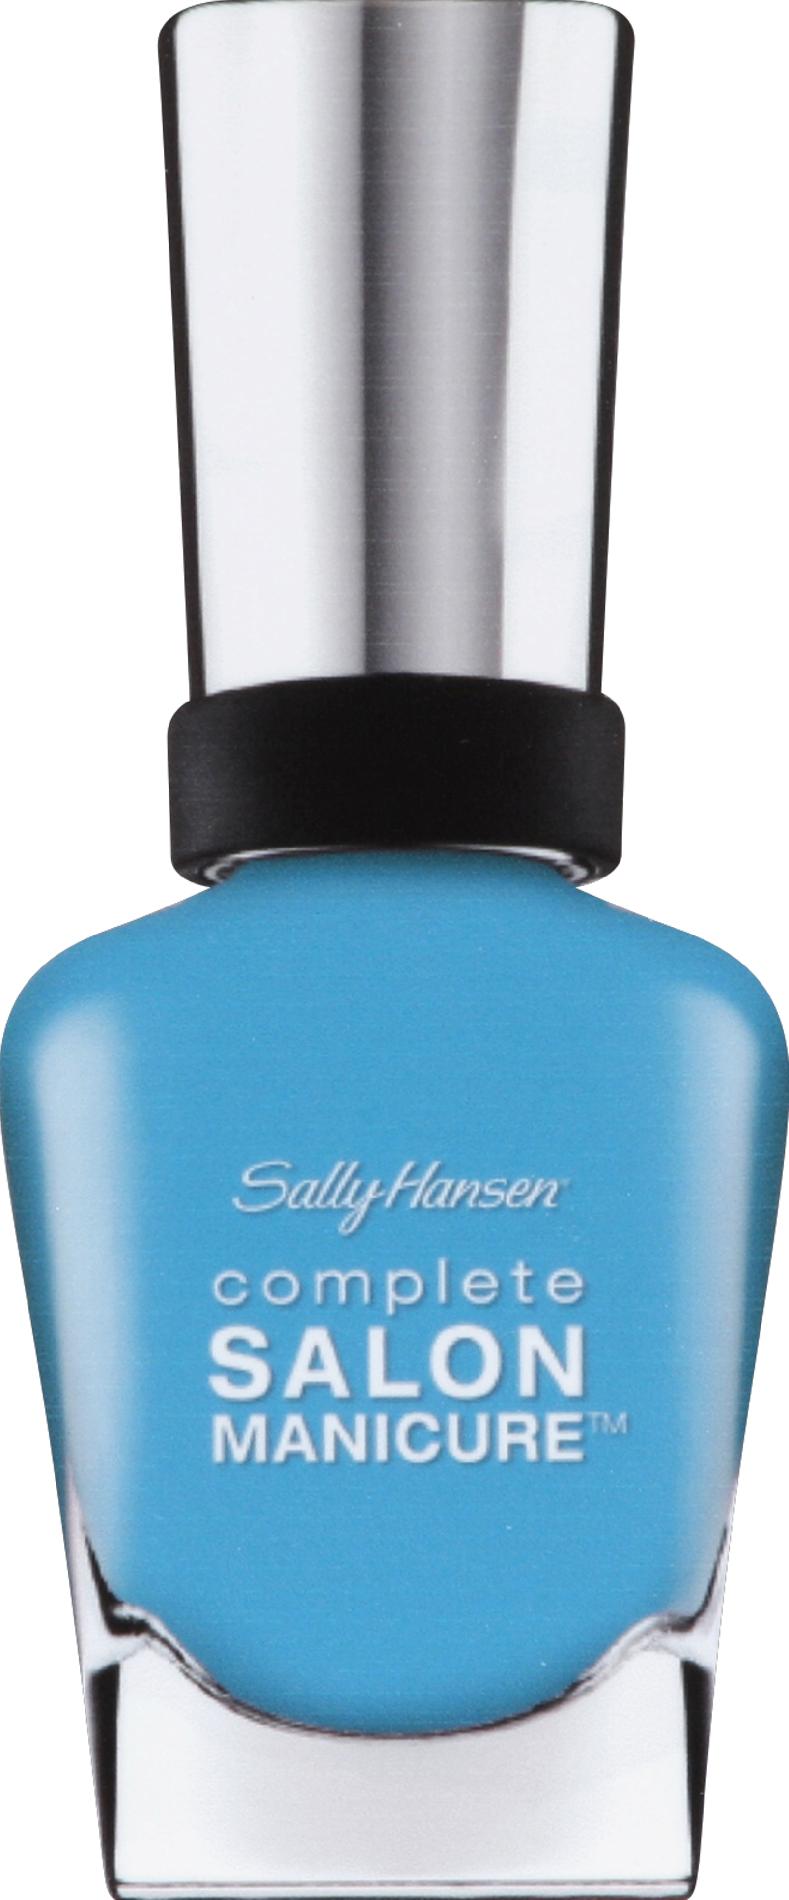 Sally Hansen Complete Salon Manicure Nail, Water Color,0.5 fl oz, (14.7 ml)